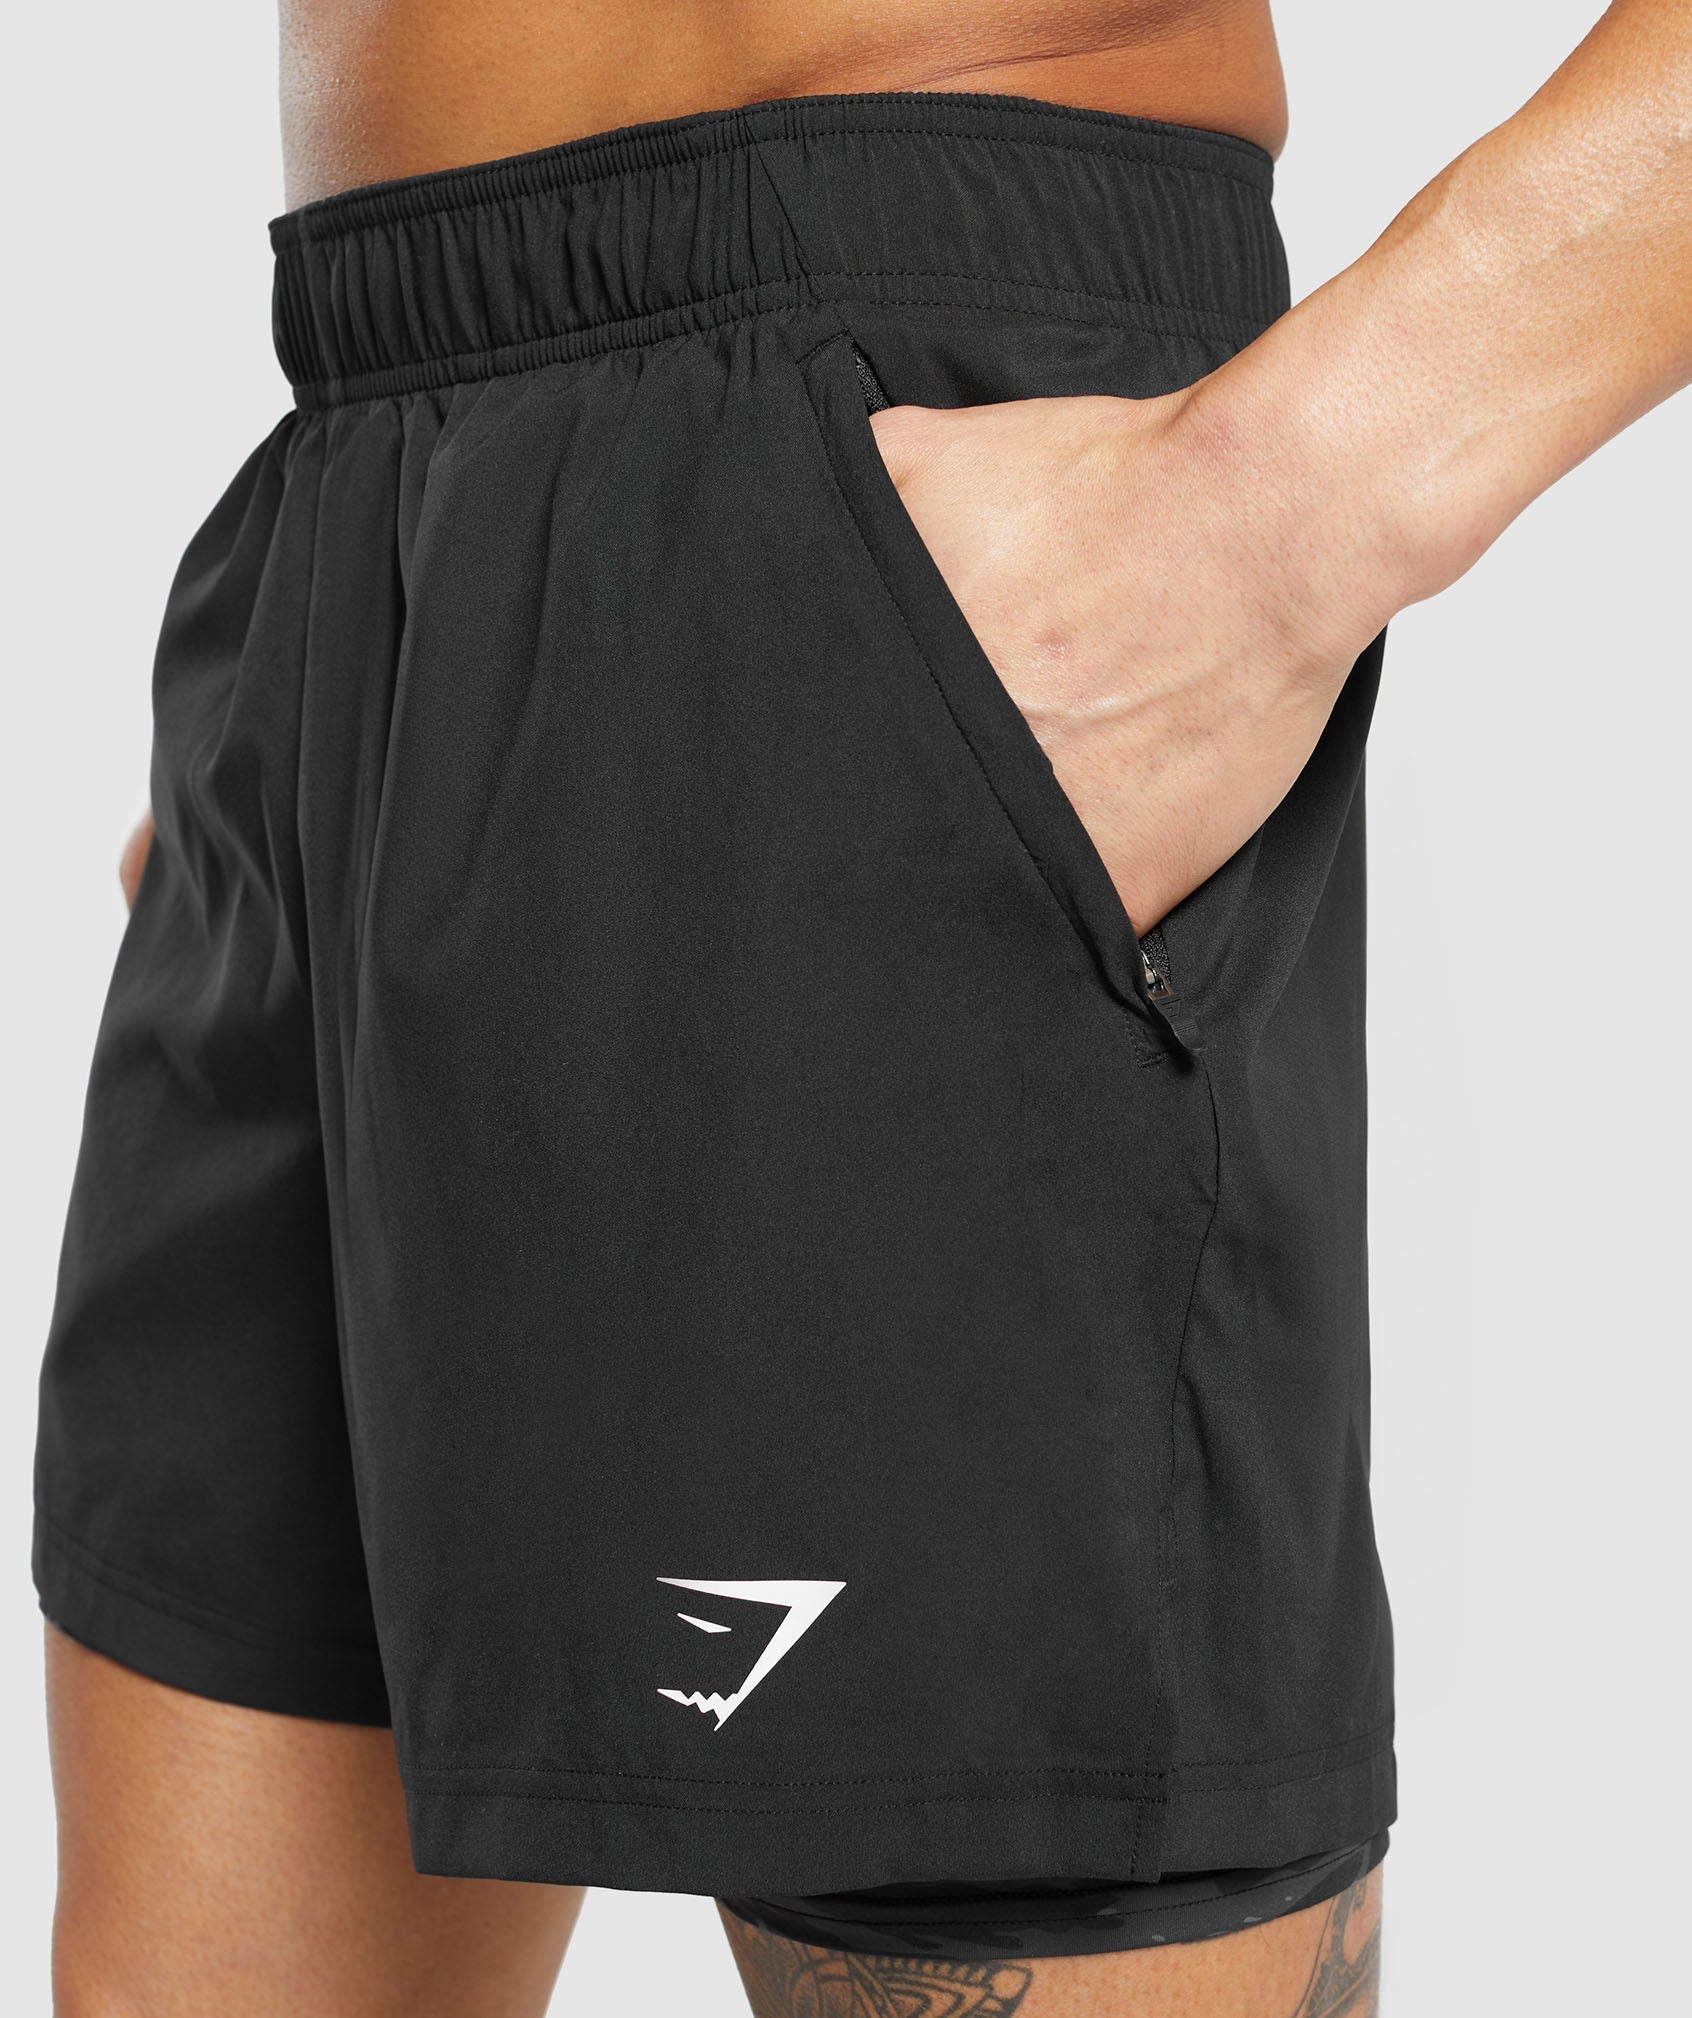 Sport  5" Shorts in Black/Asphalt Grey - view 6